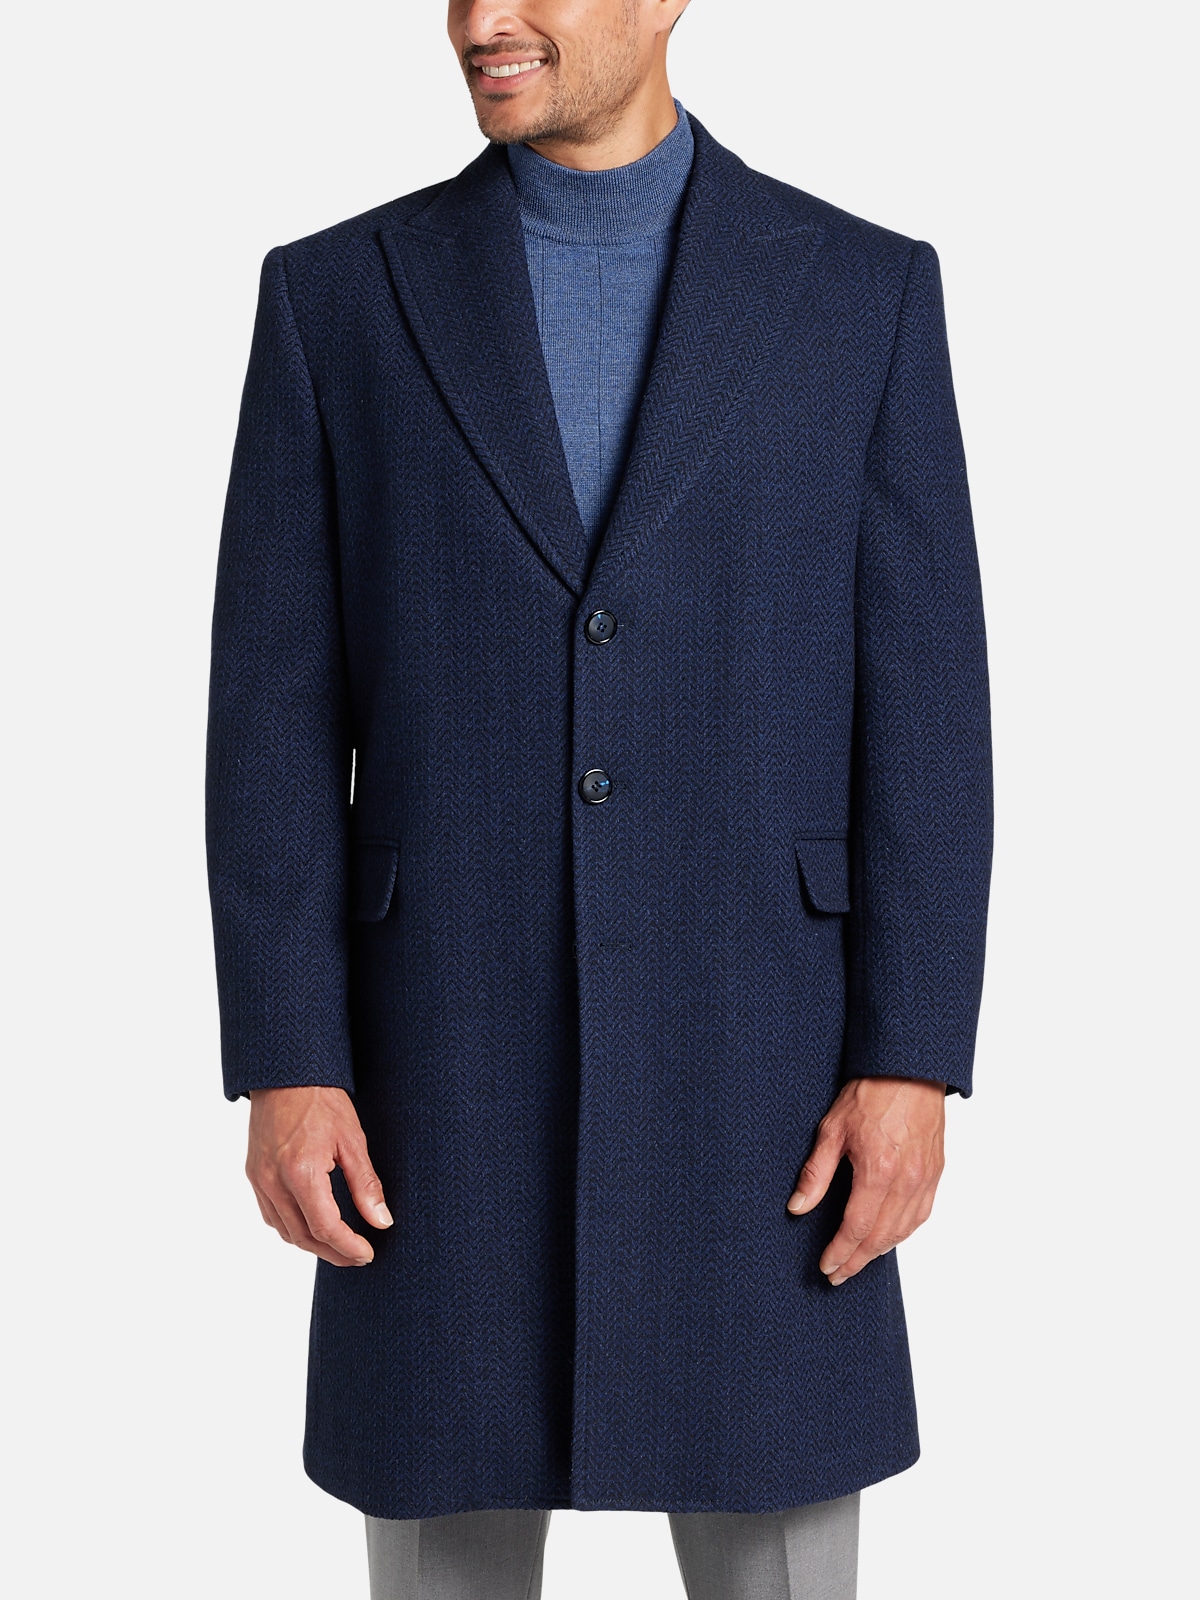 Joseph Abboud Modern Fit Topcoat | All Clearance $39.99| Men's Wearhouse